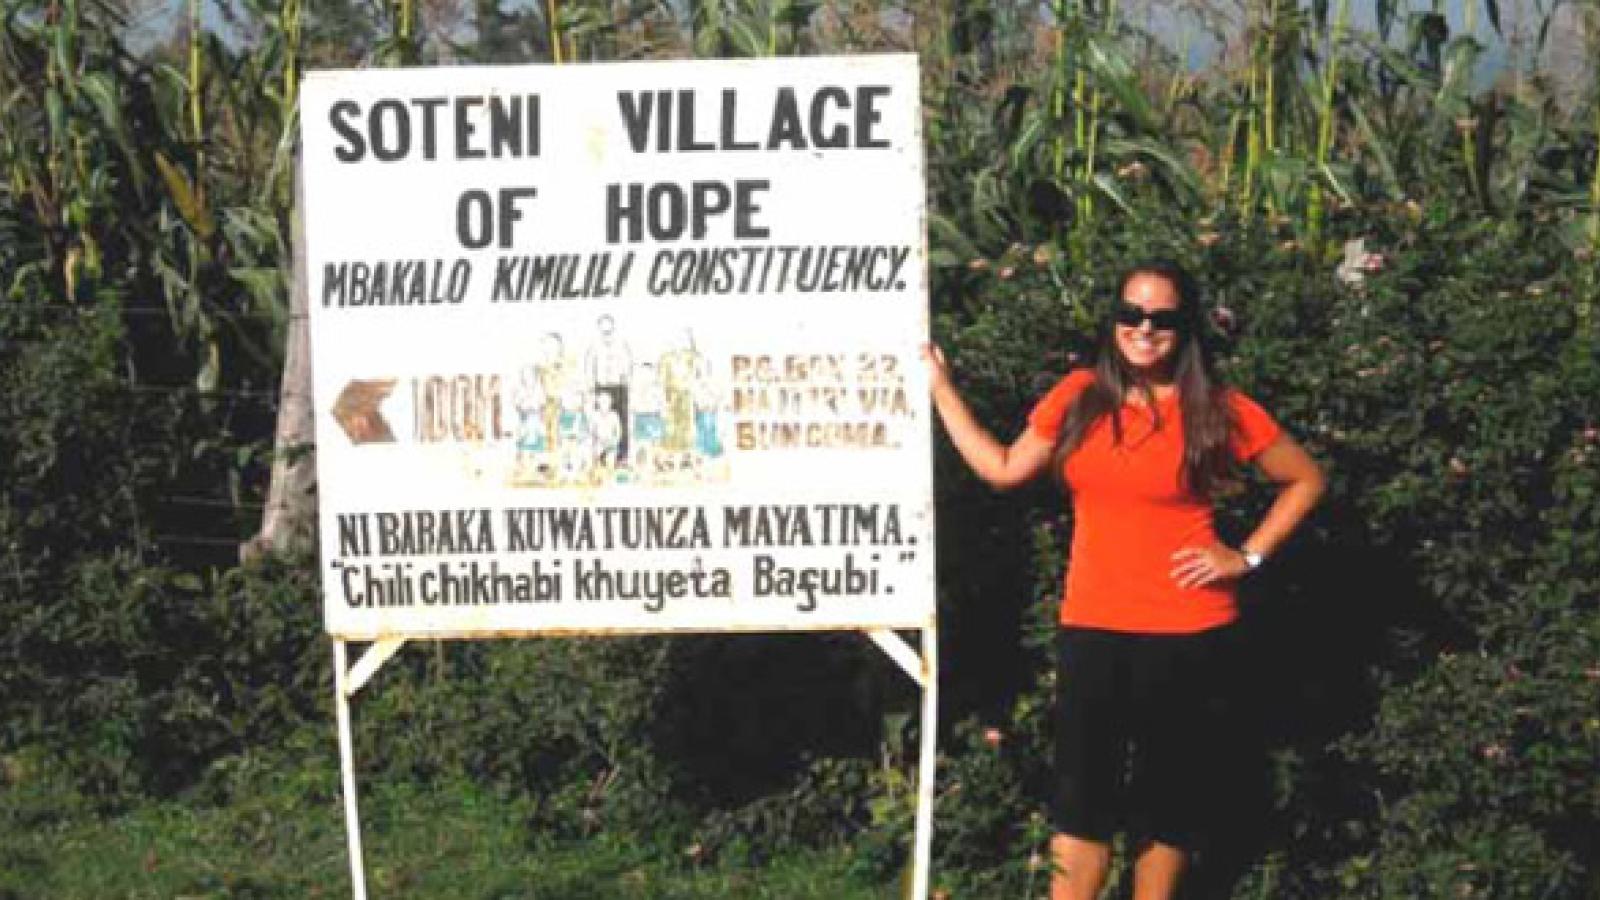 Alexa Gudelsky next to the sign for Soteni Village, Kenya.